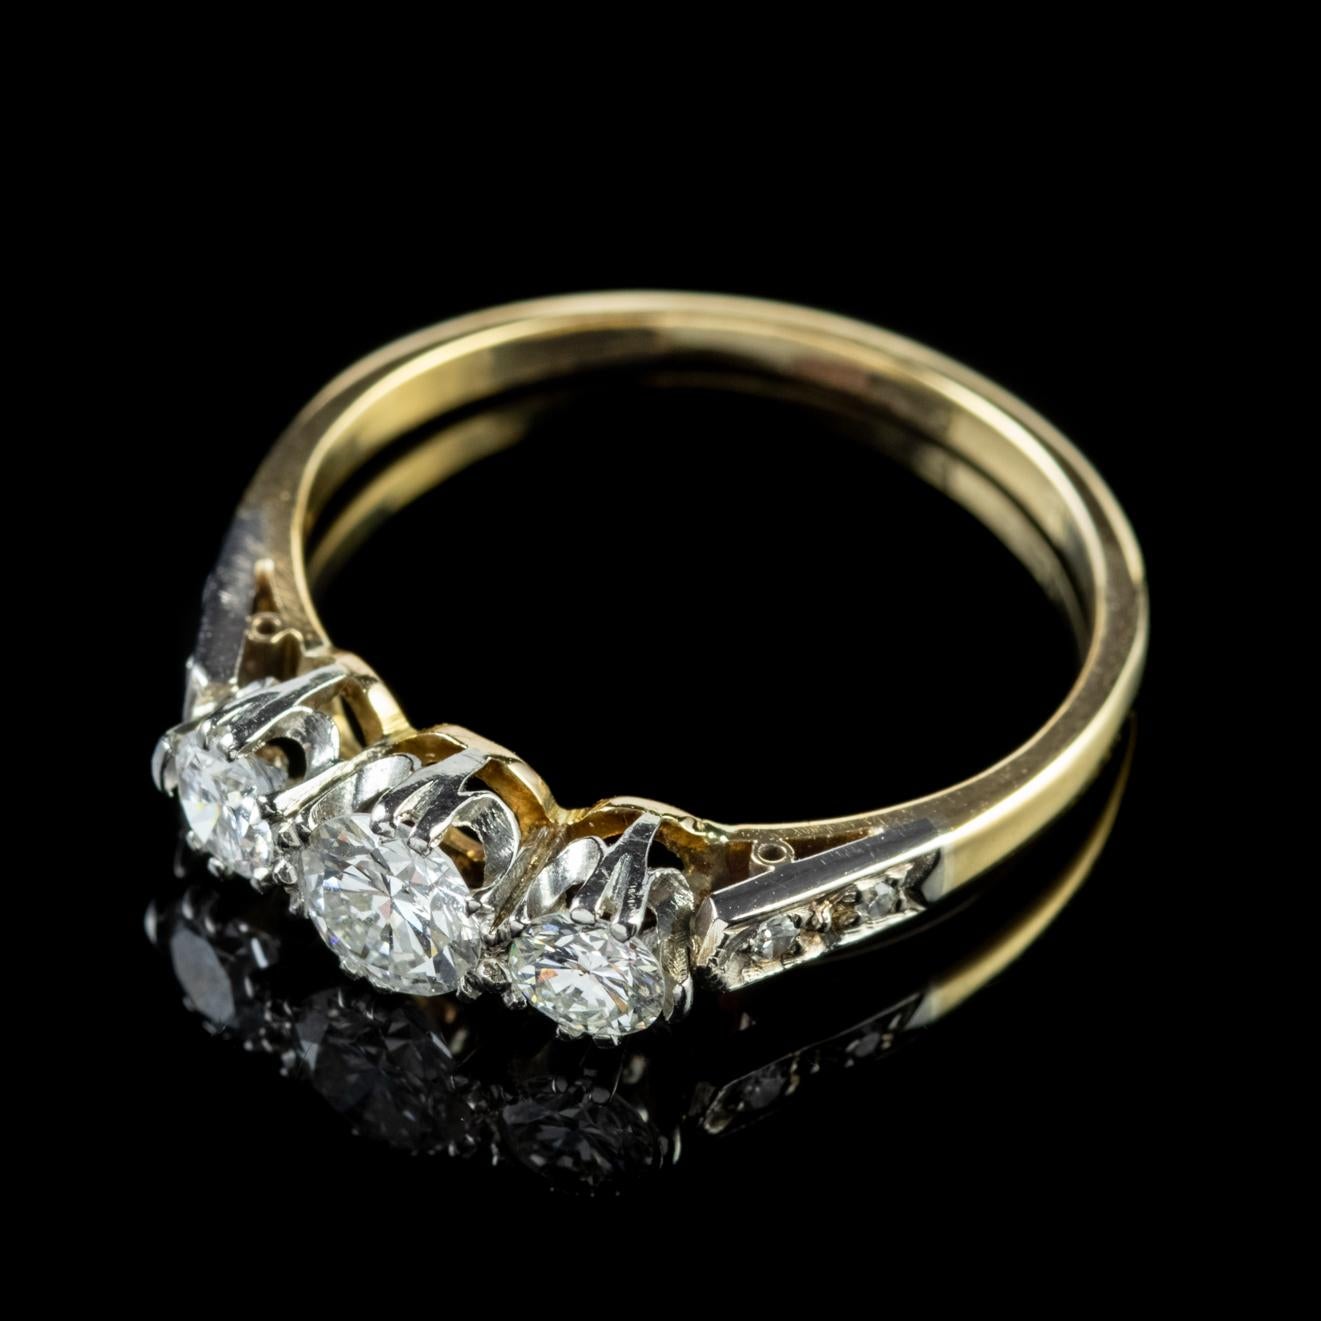 Antique Edwardian Trilogy Diamond Ring Platinum 18 Carat Gold, circa 1910 1